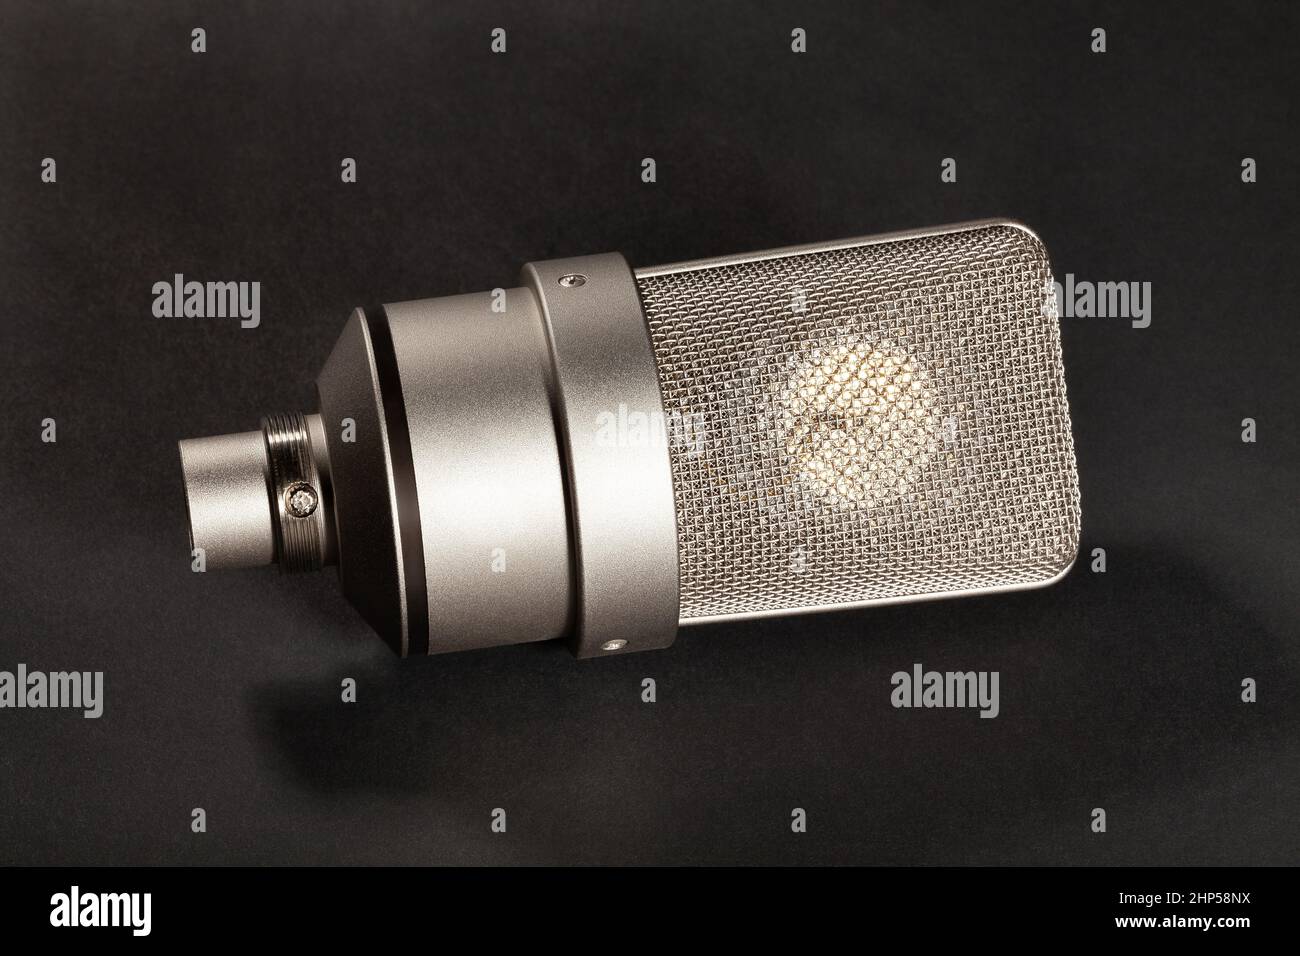 condenser microphone on black background Stock Photo